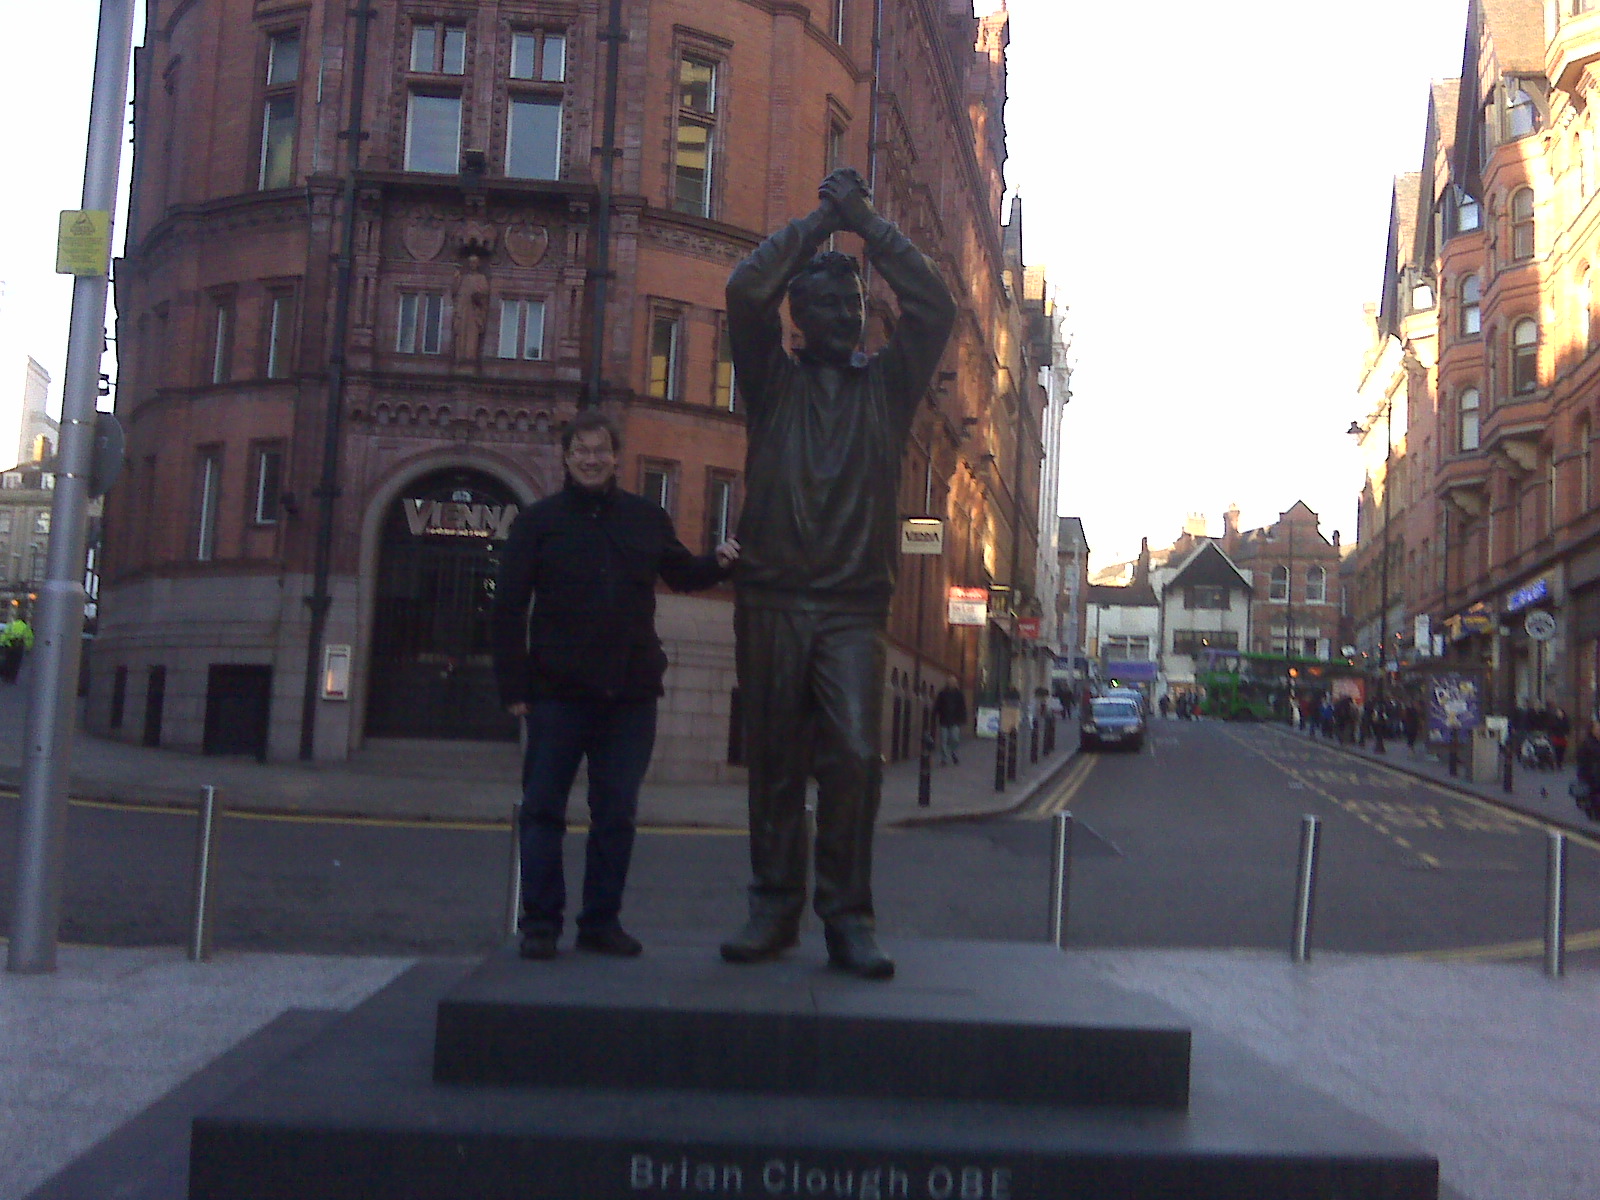 Brian Clough statue, Nottingham